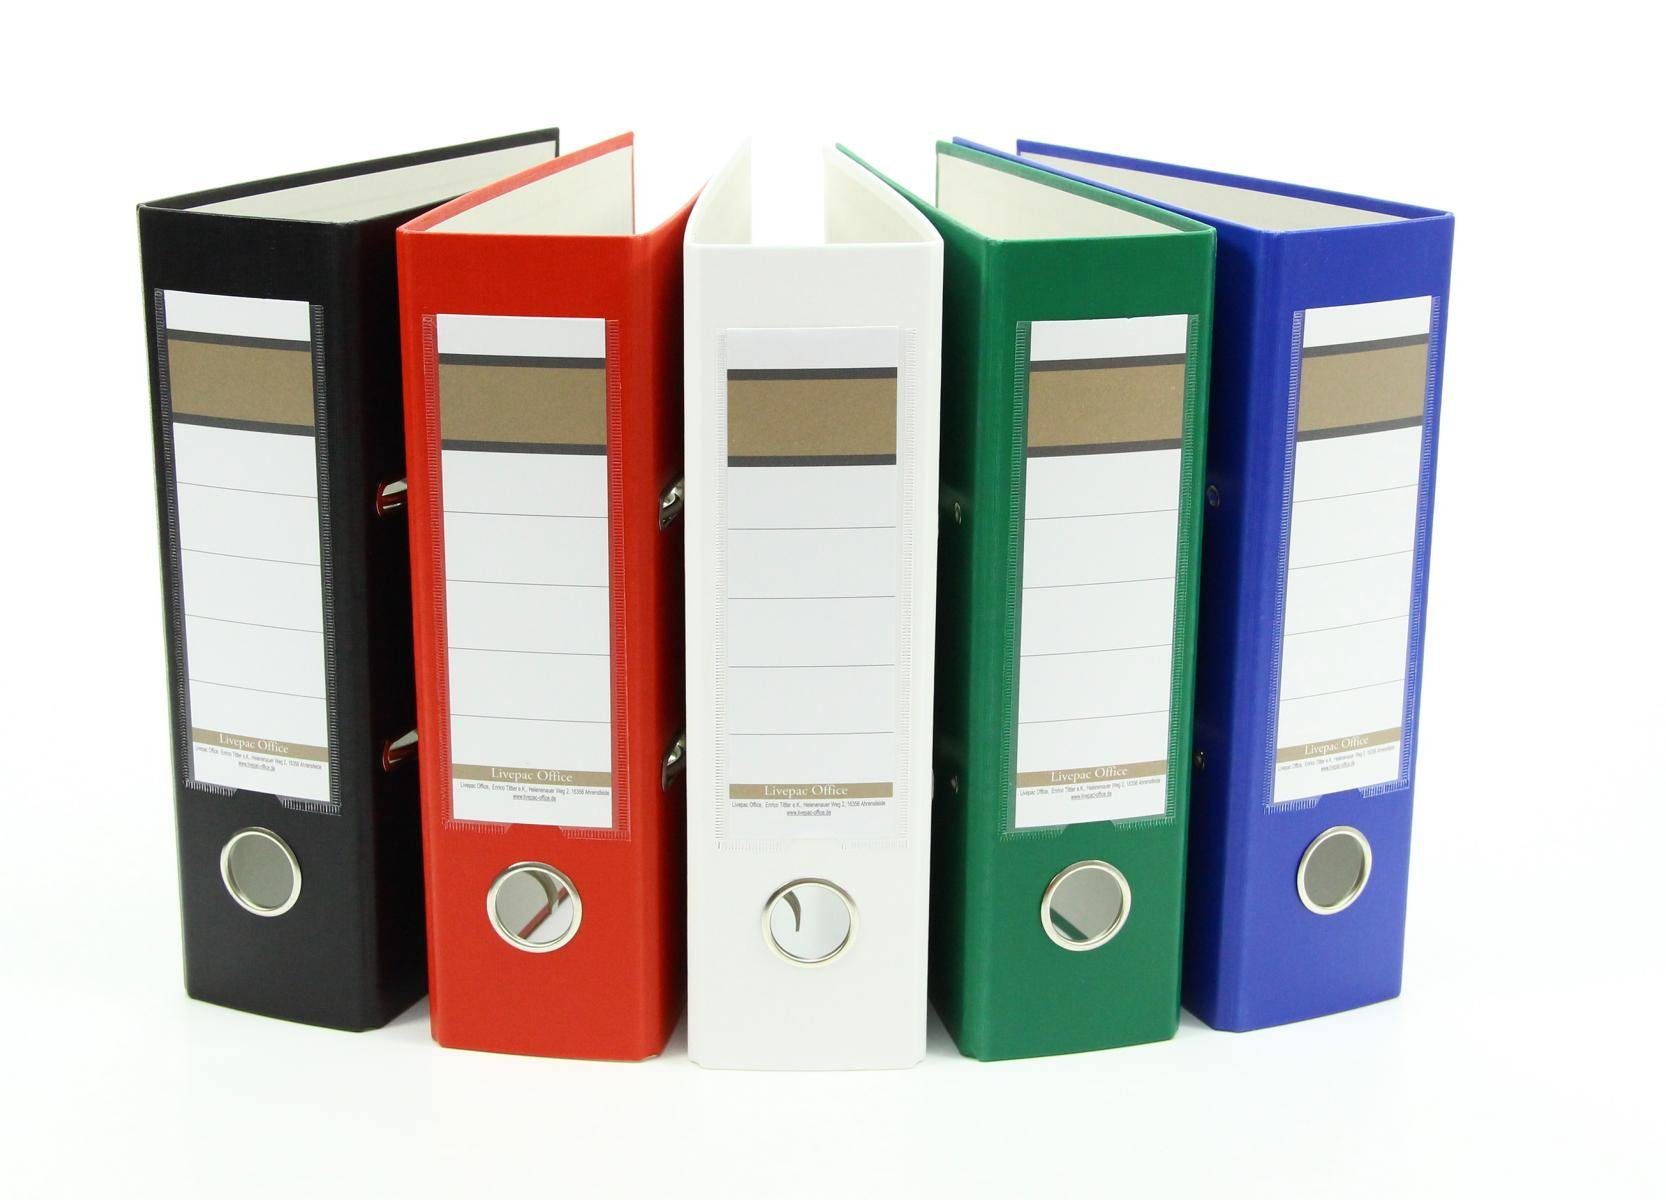 Livepac Office Aktenordner 10x Ordner / DIN A5 / 75mm / Farbe: je 2x weiß, grün, blau, rot und sc